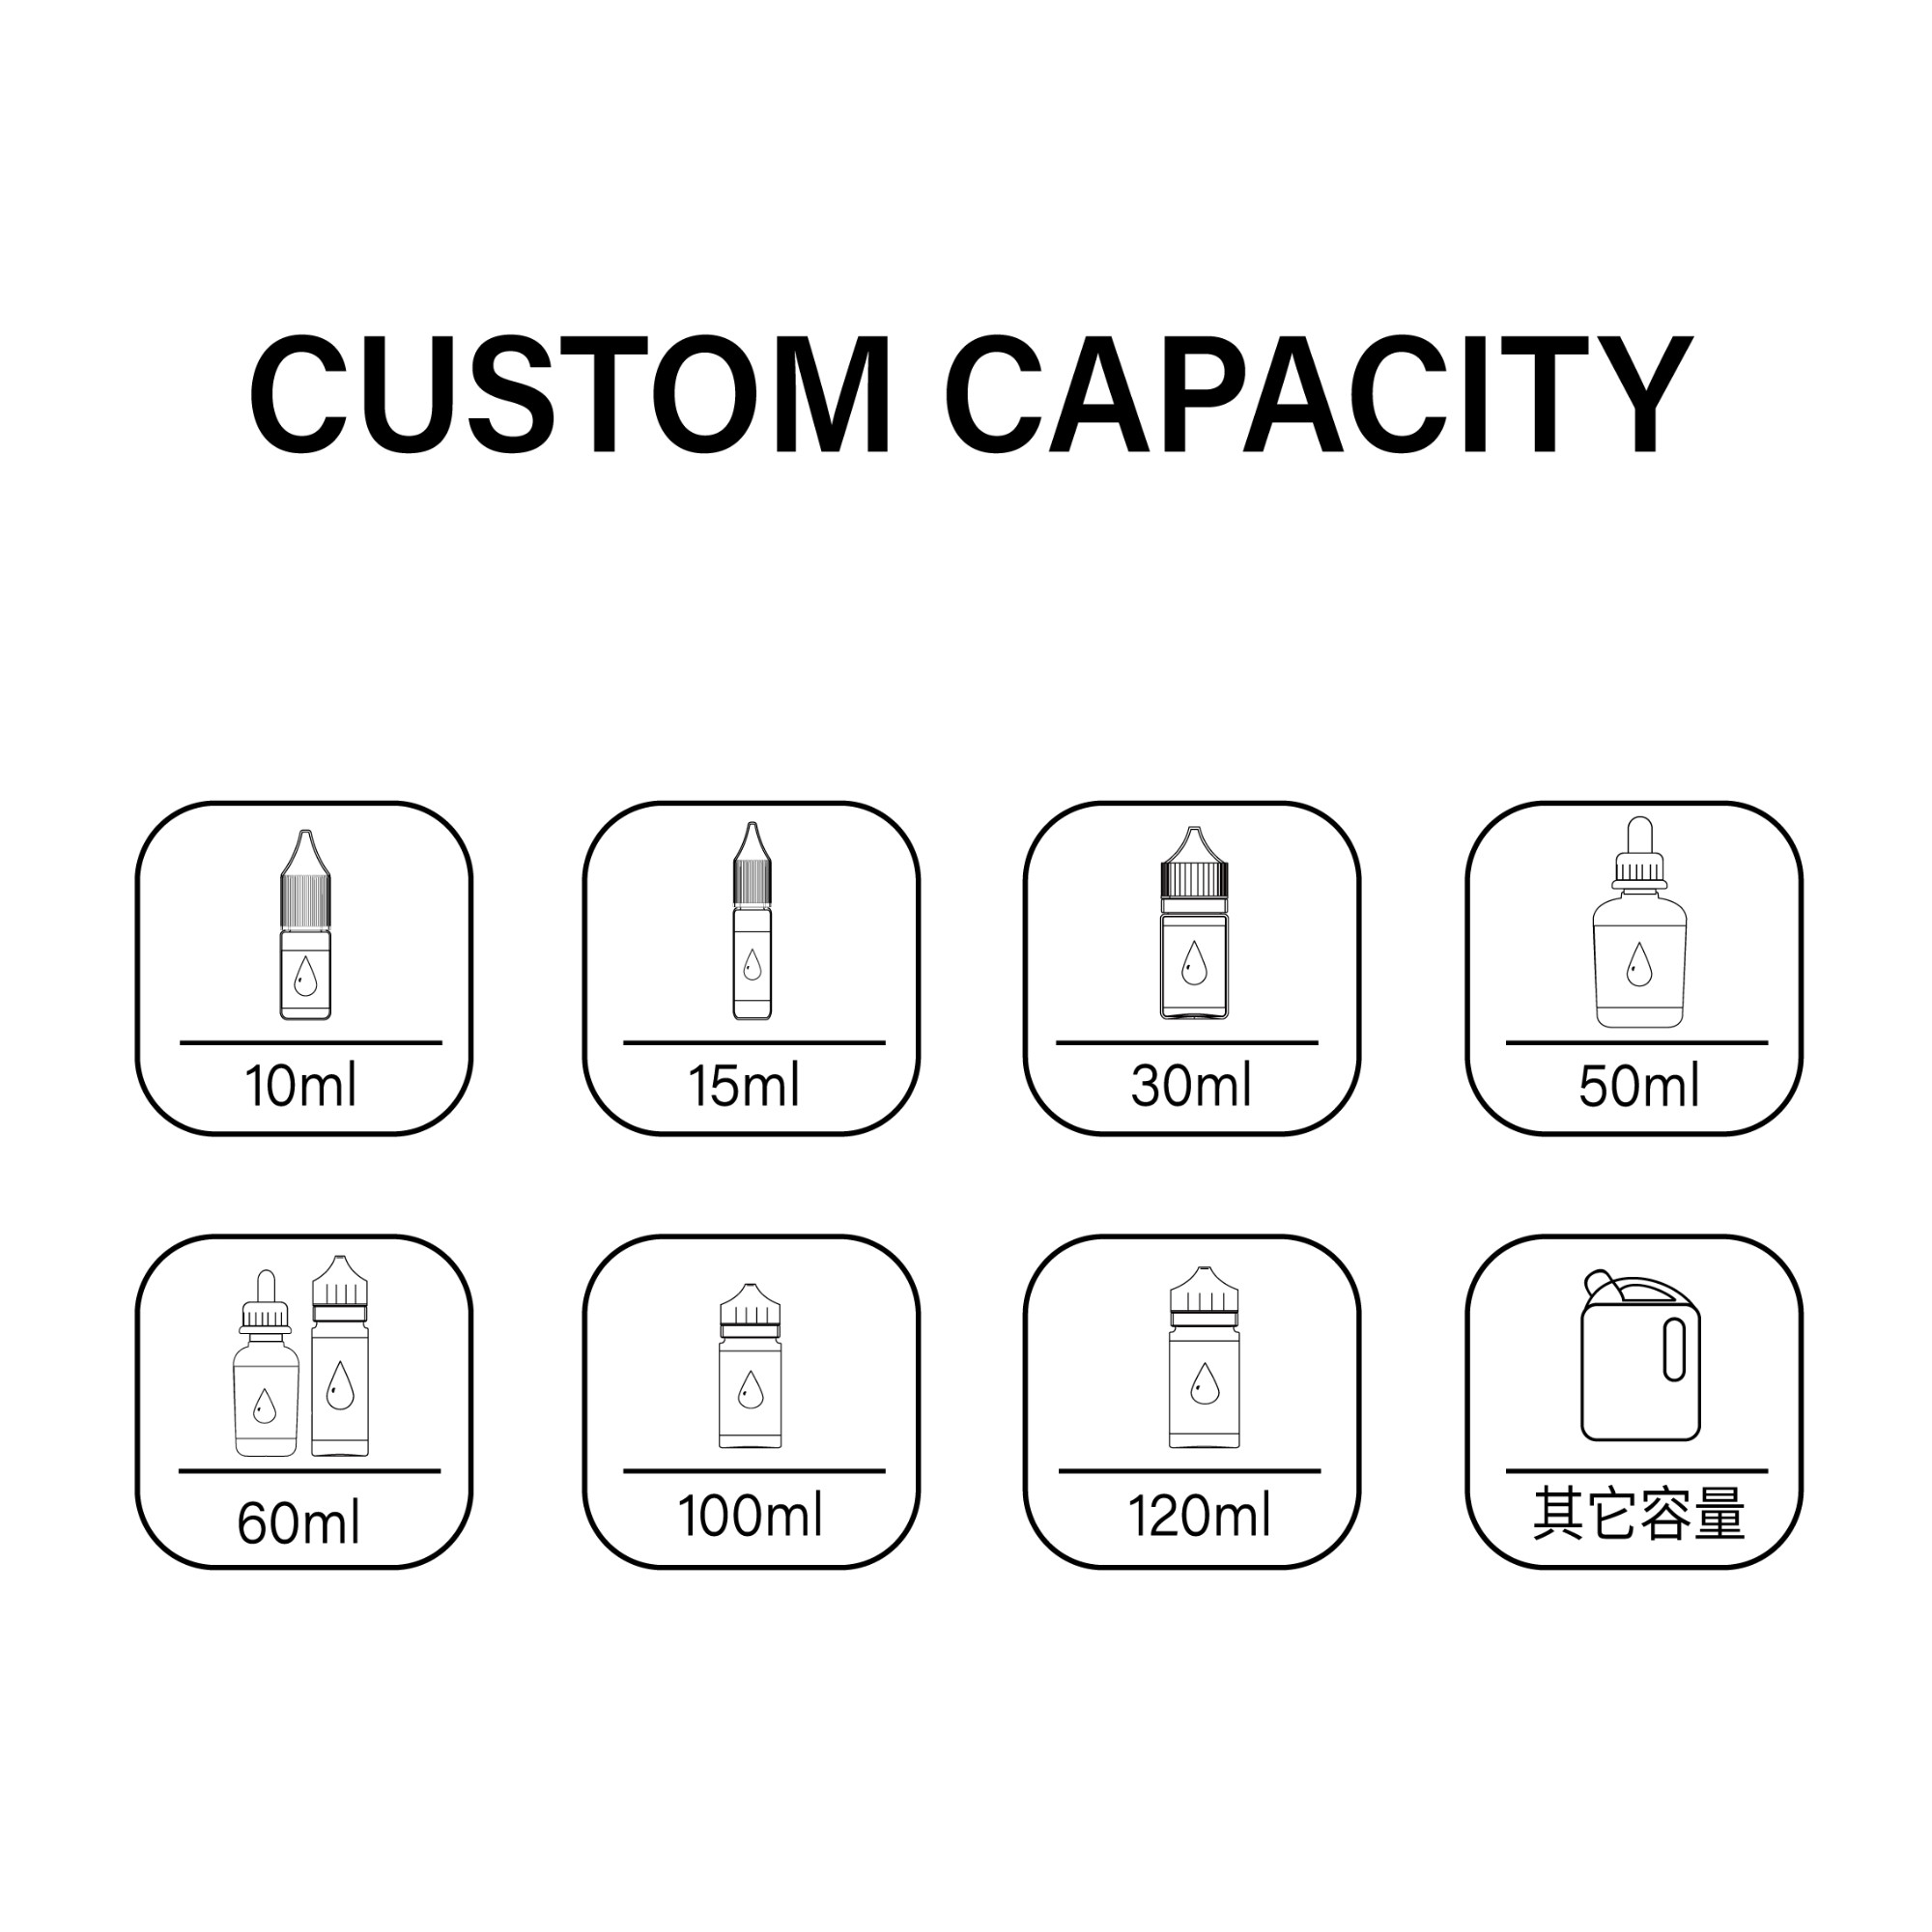 Custom capacity